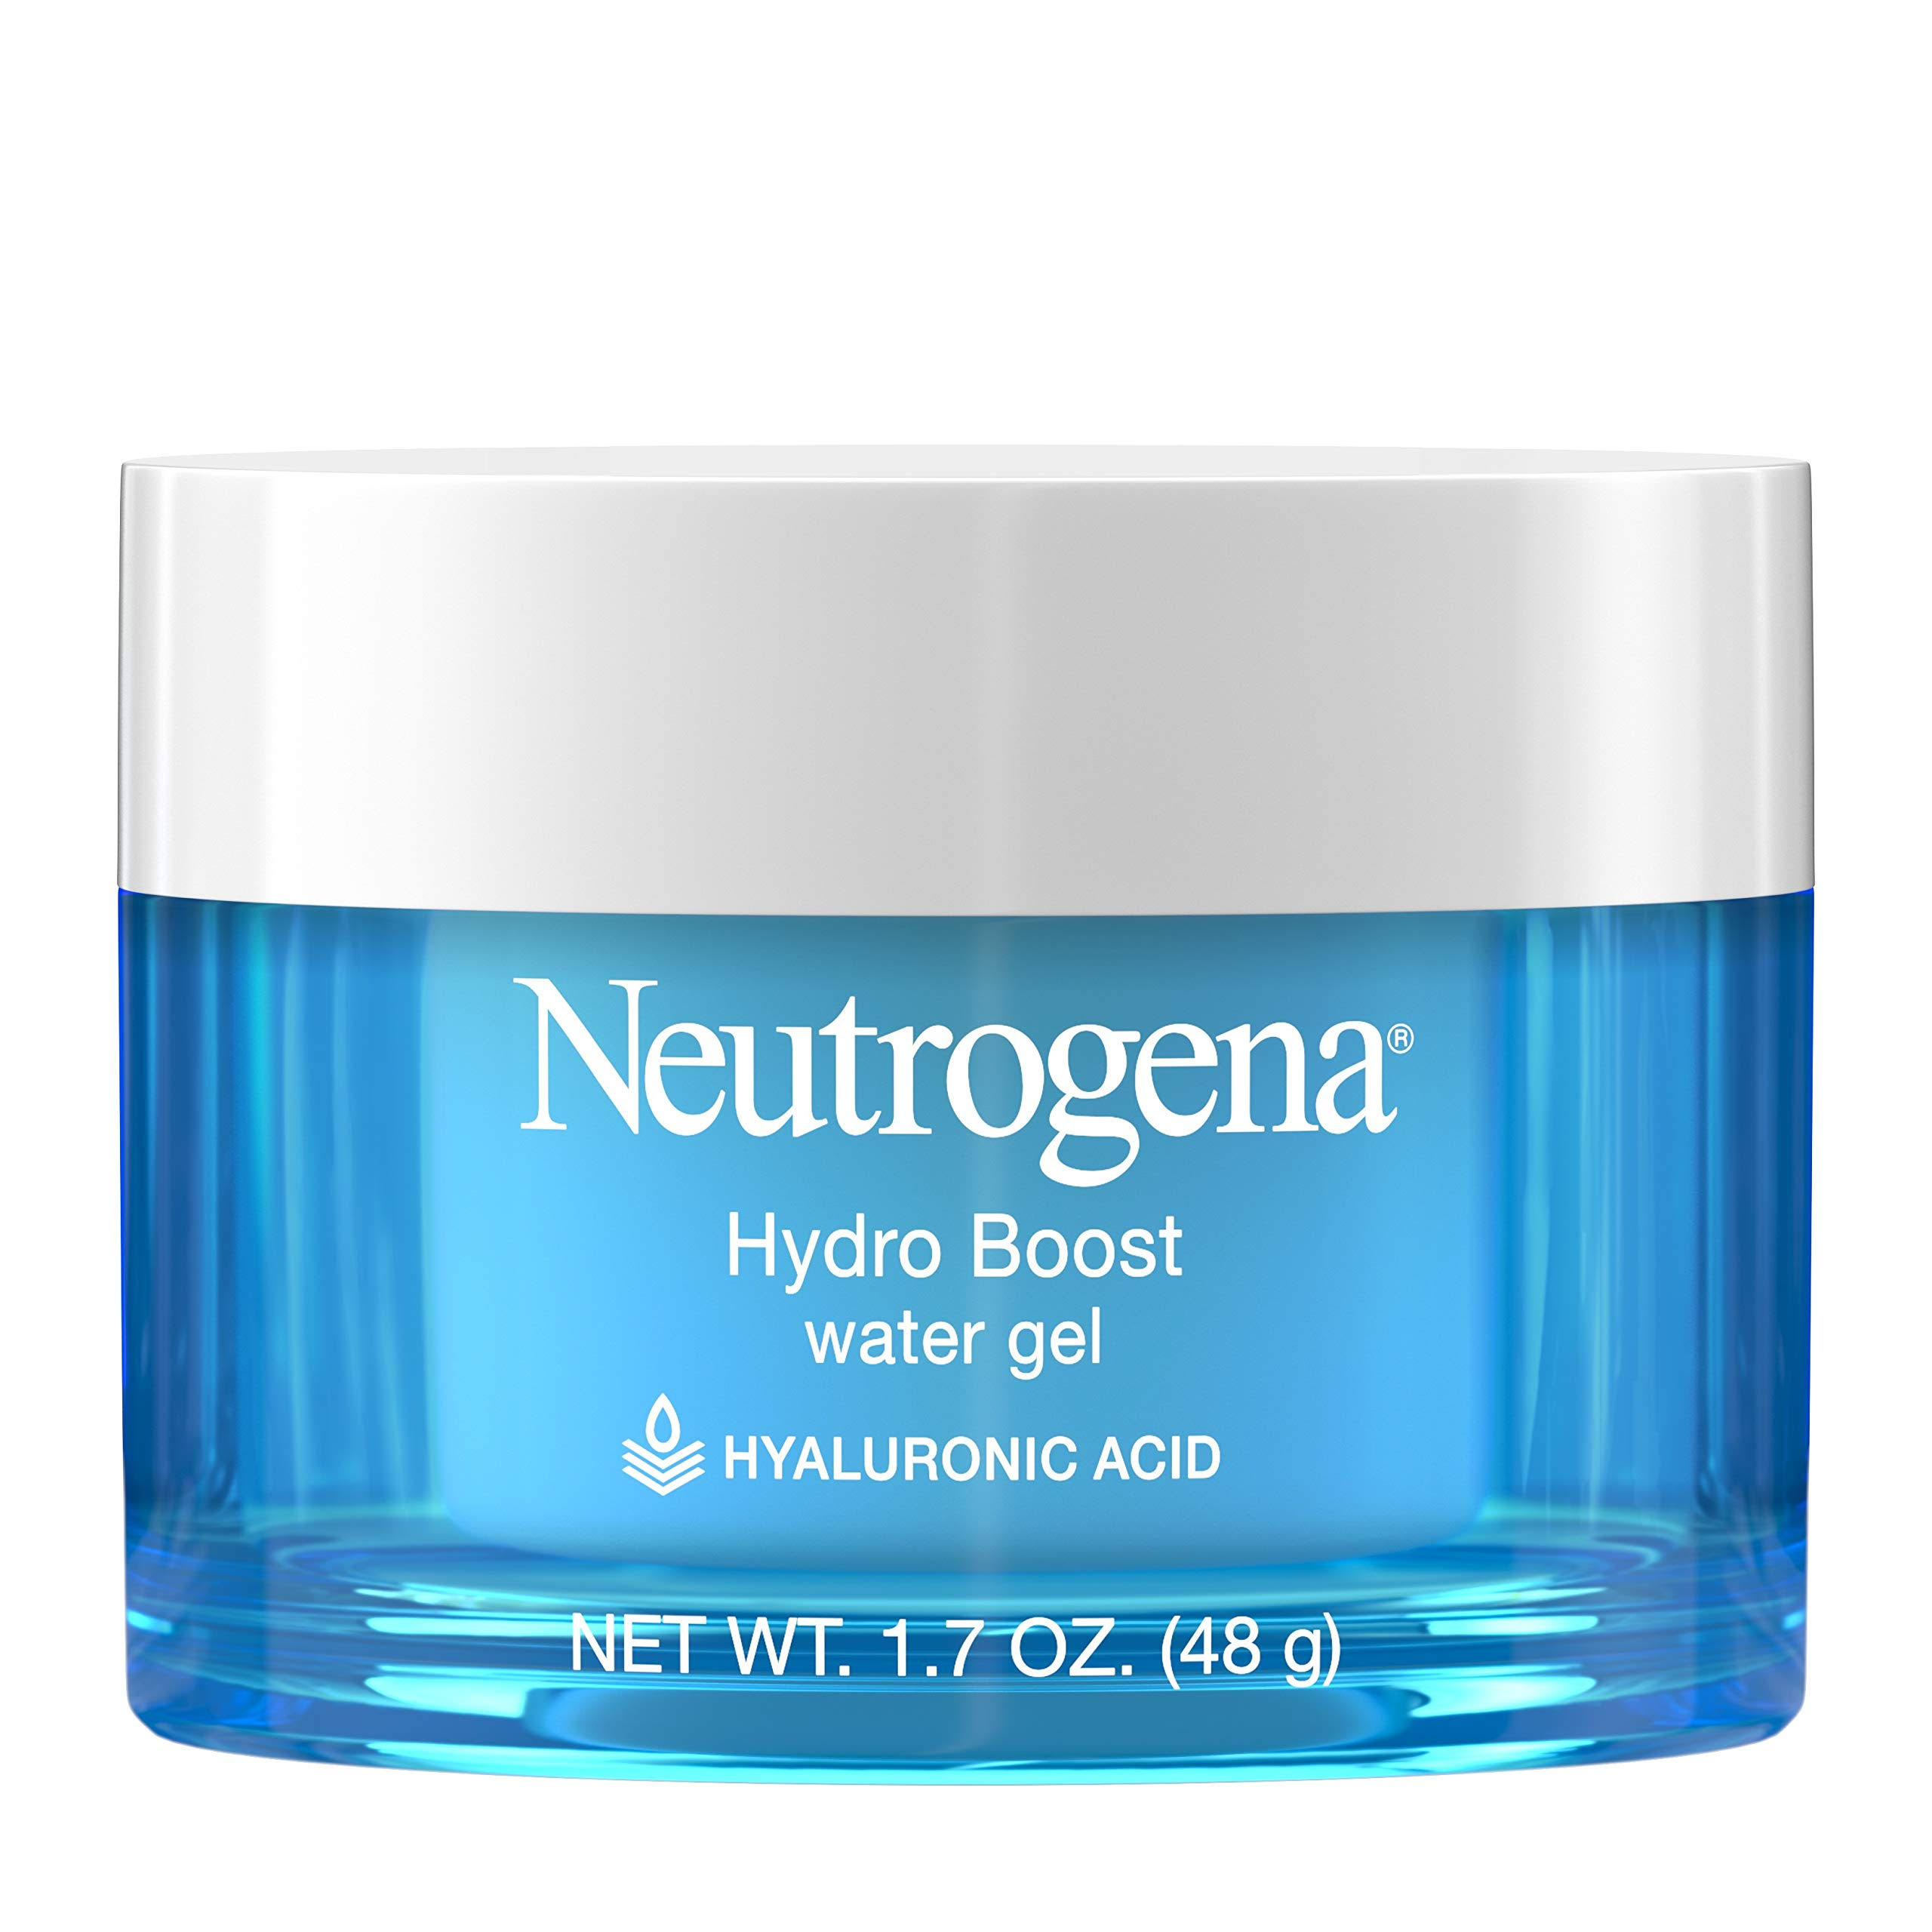 Neutrogena Hydro Boost Water Gel - 1.7oz